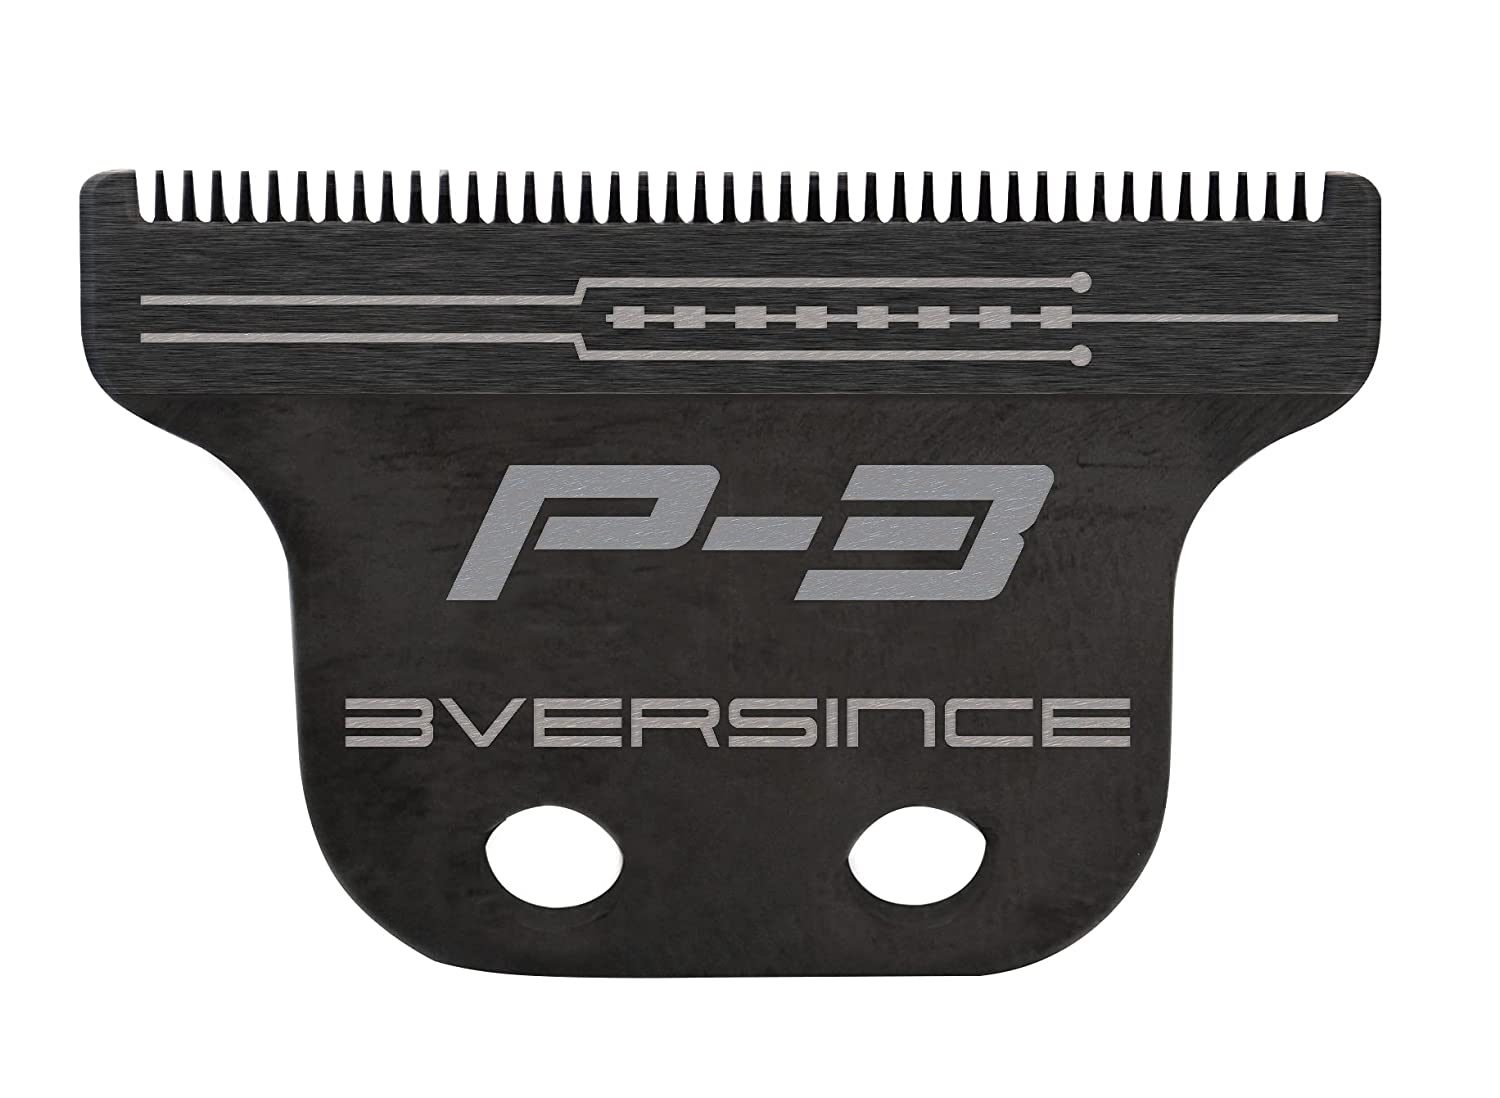 3versince P3 Modified blade